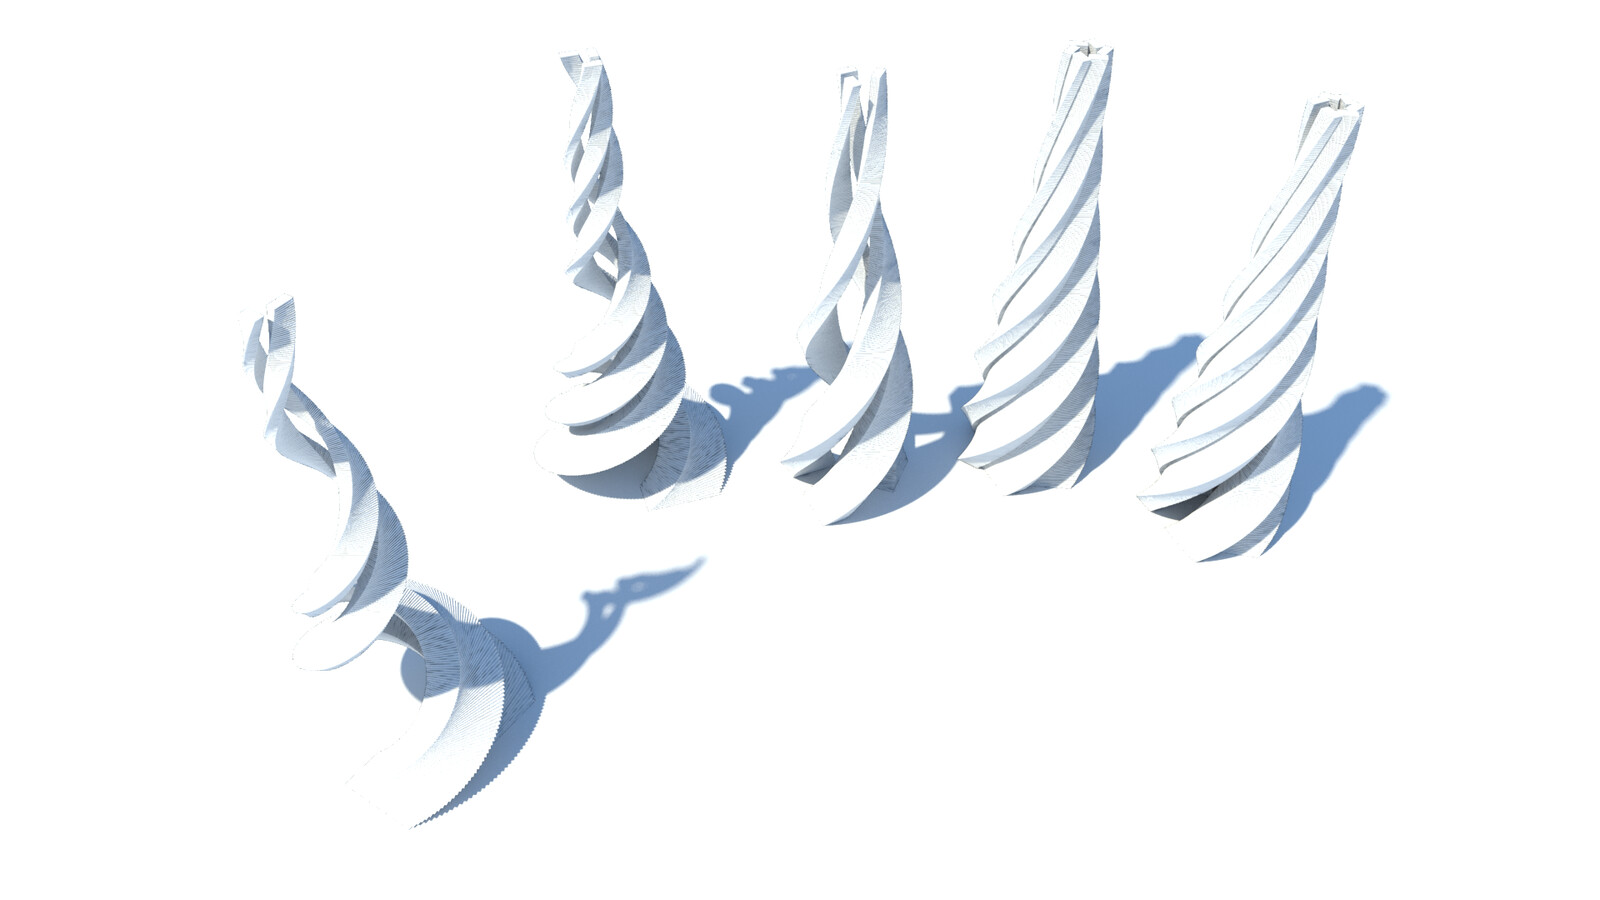 Procedurally-generated spiral towers - bird's eye view